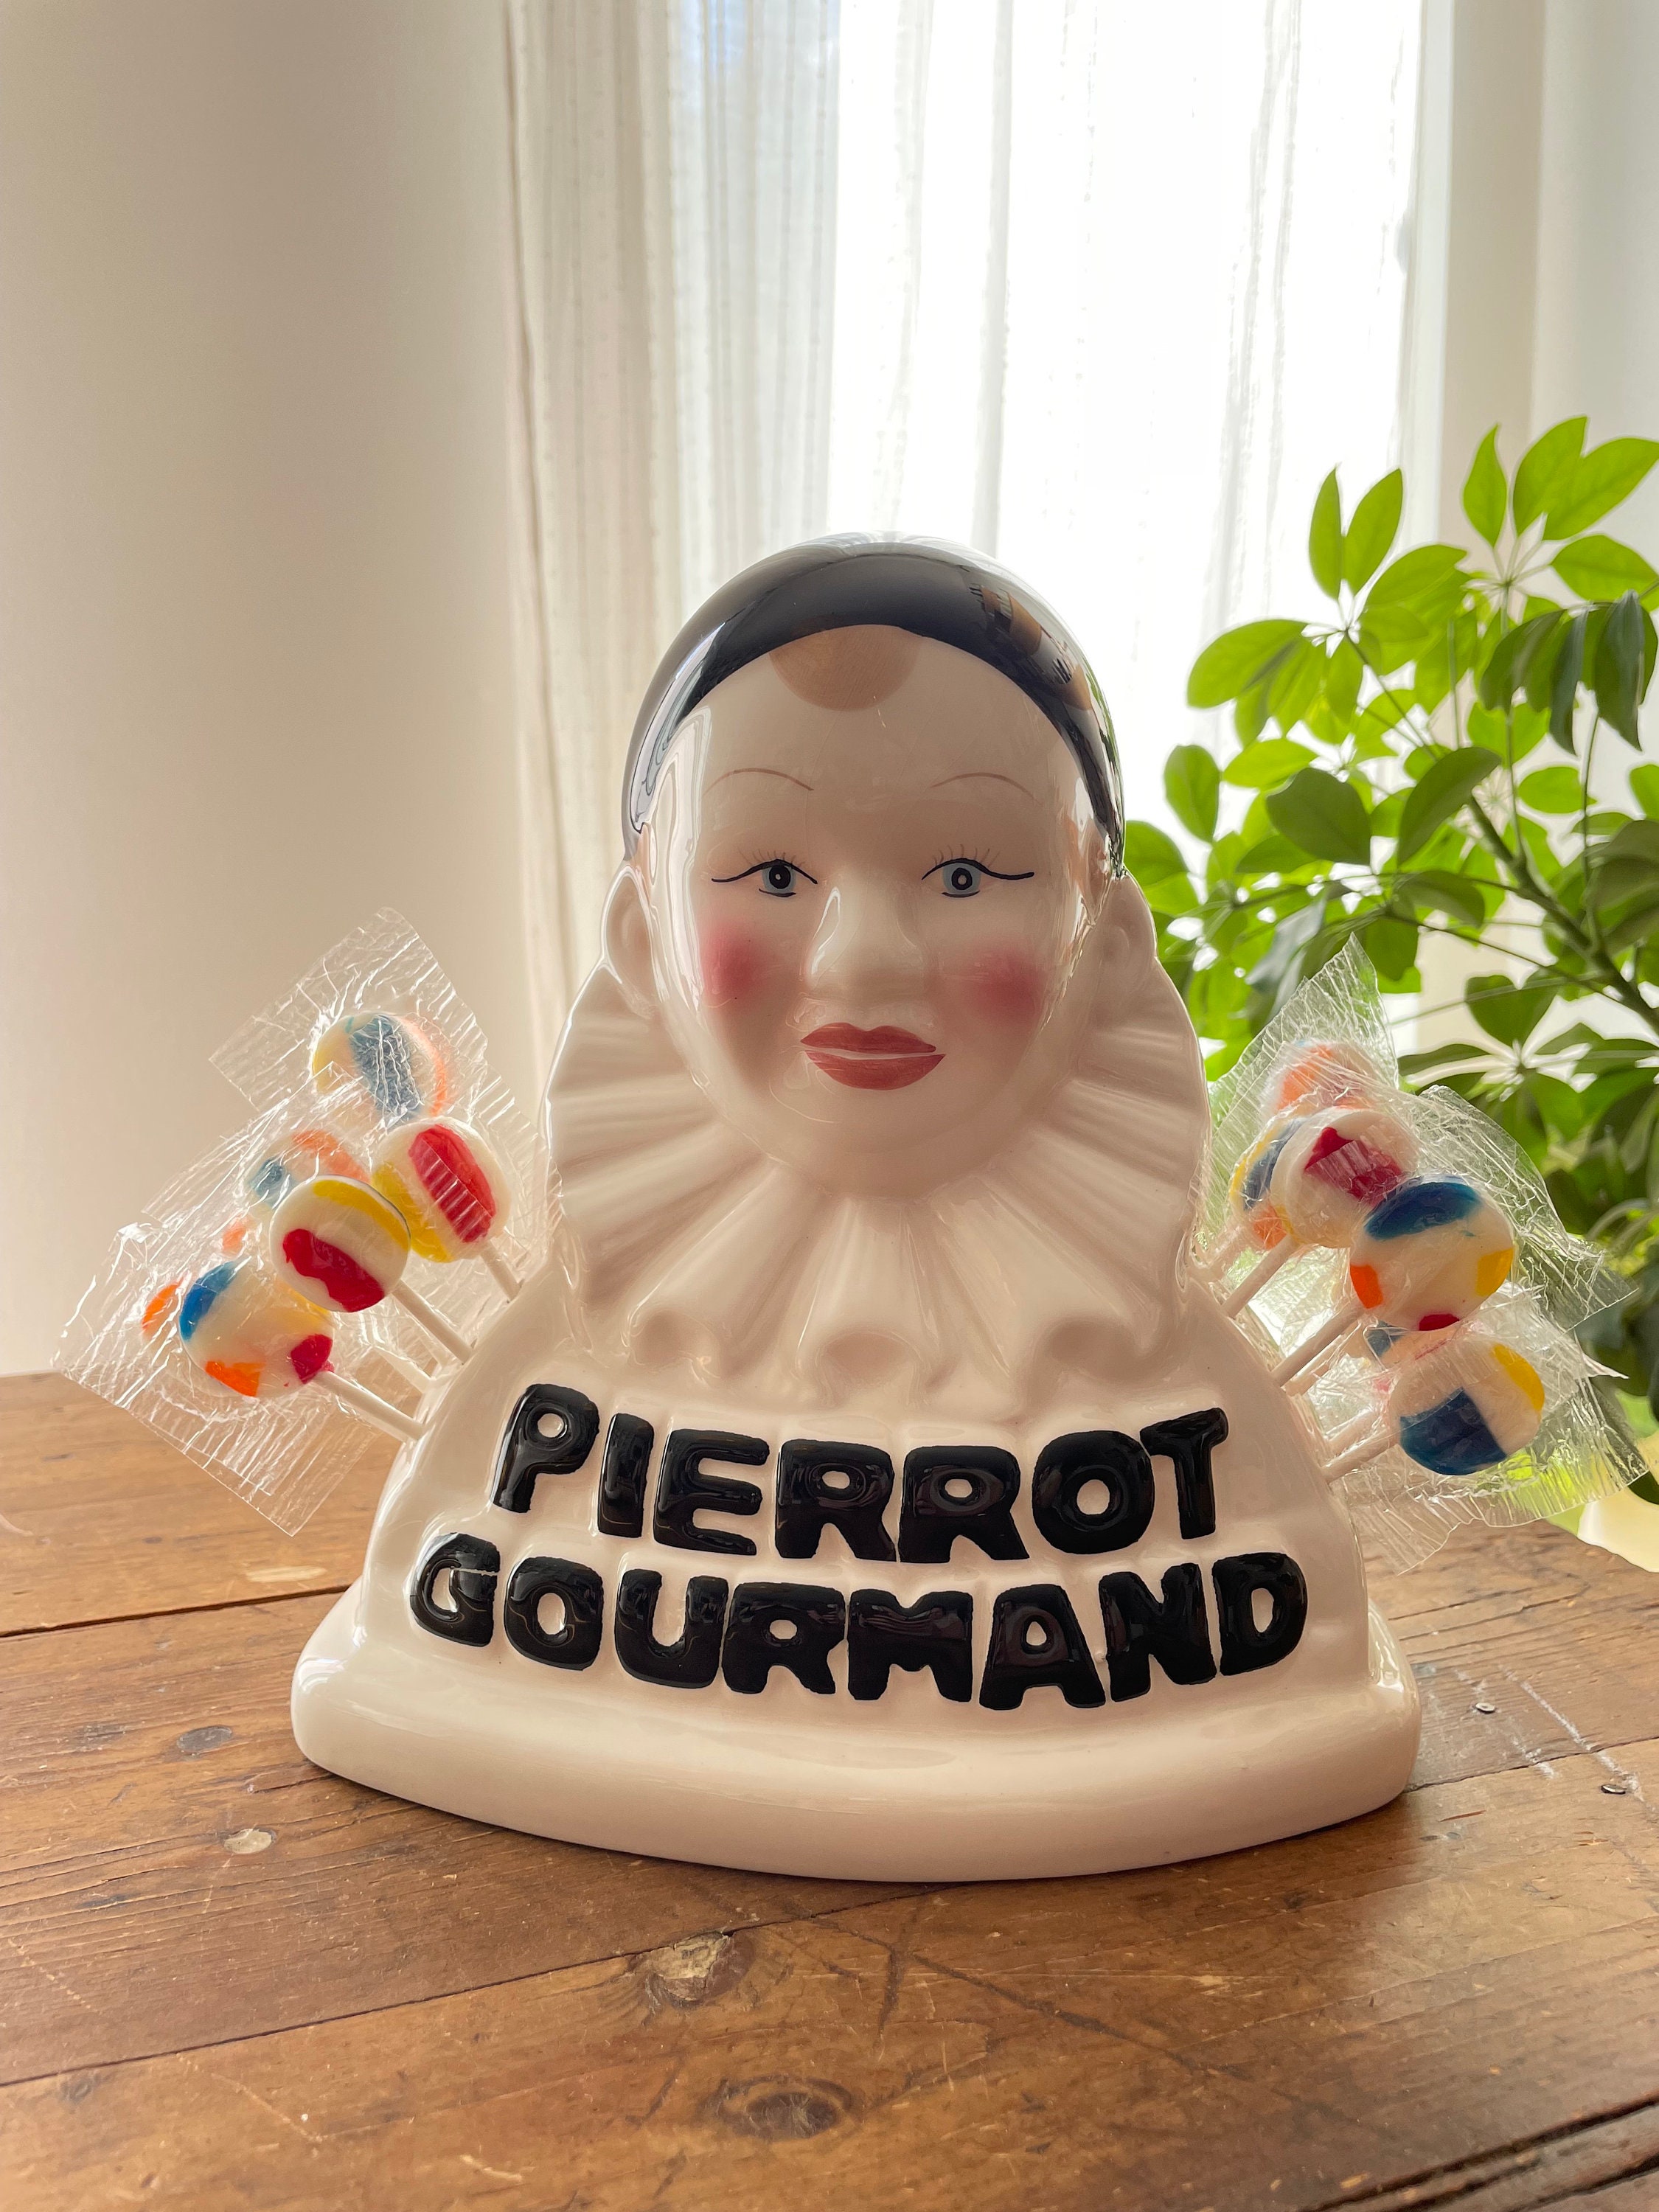 French Pierrot Gourmand bonbons et sucettes(lollipops) – Myfrenchkitchen